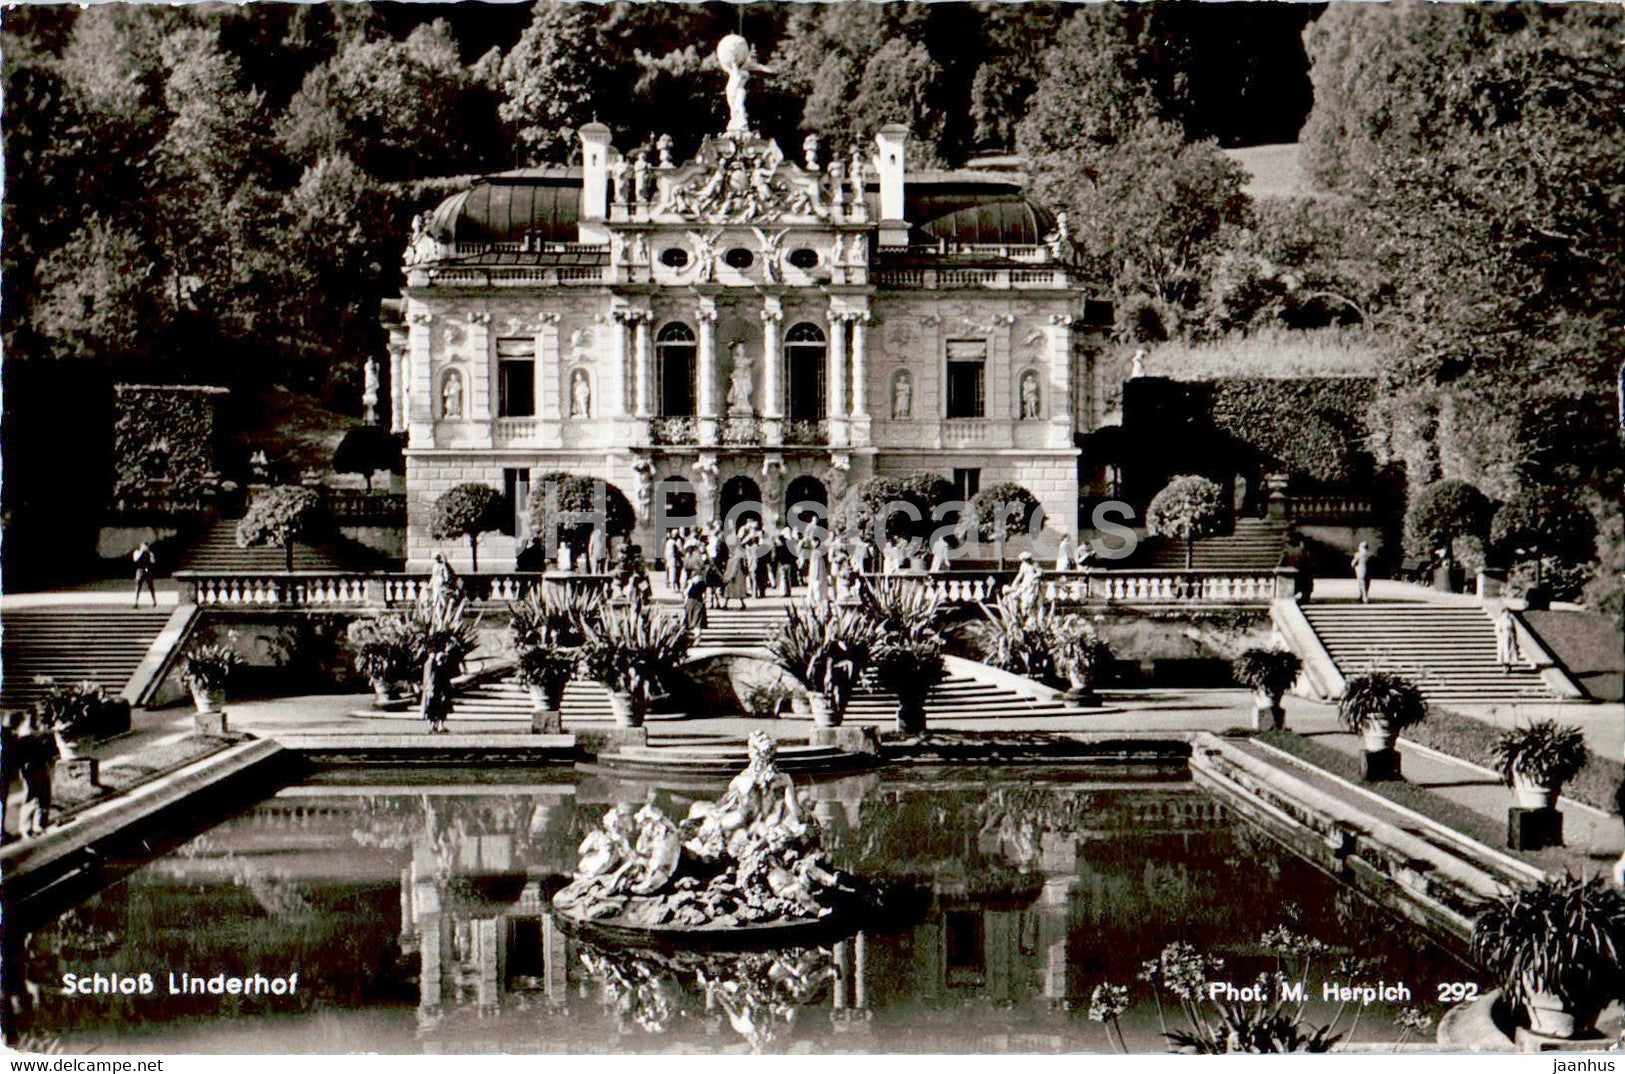 Schloss Linderhof - 292 - castle - old postcard - Germany - unused - JH Postcards